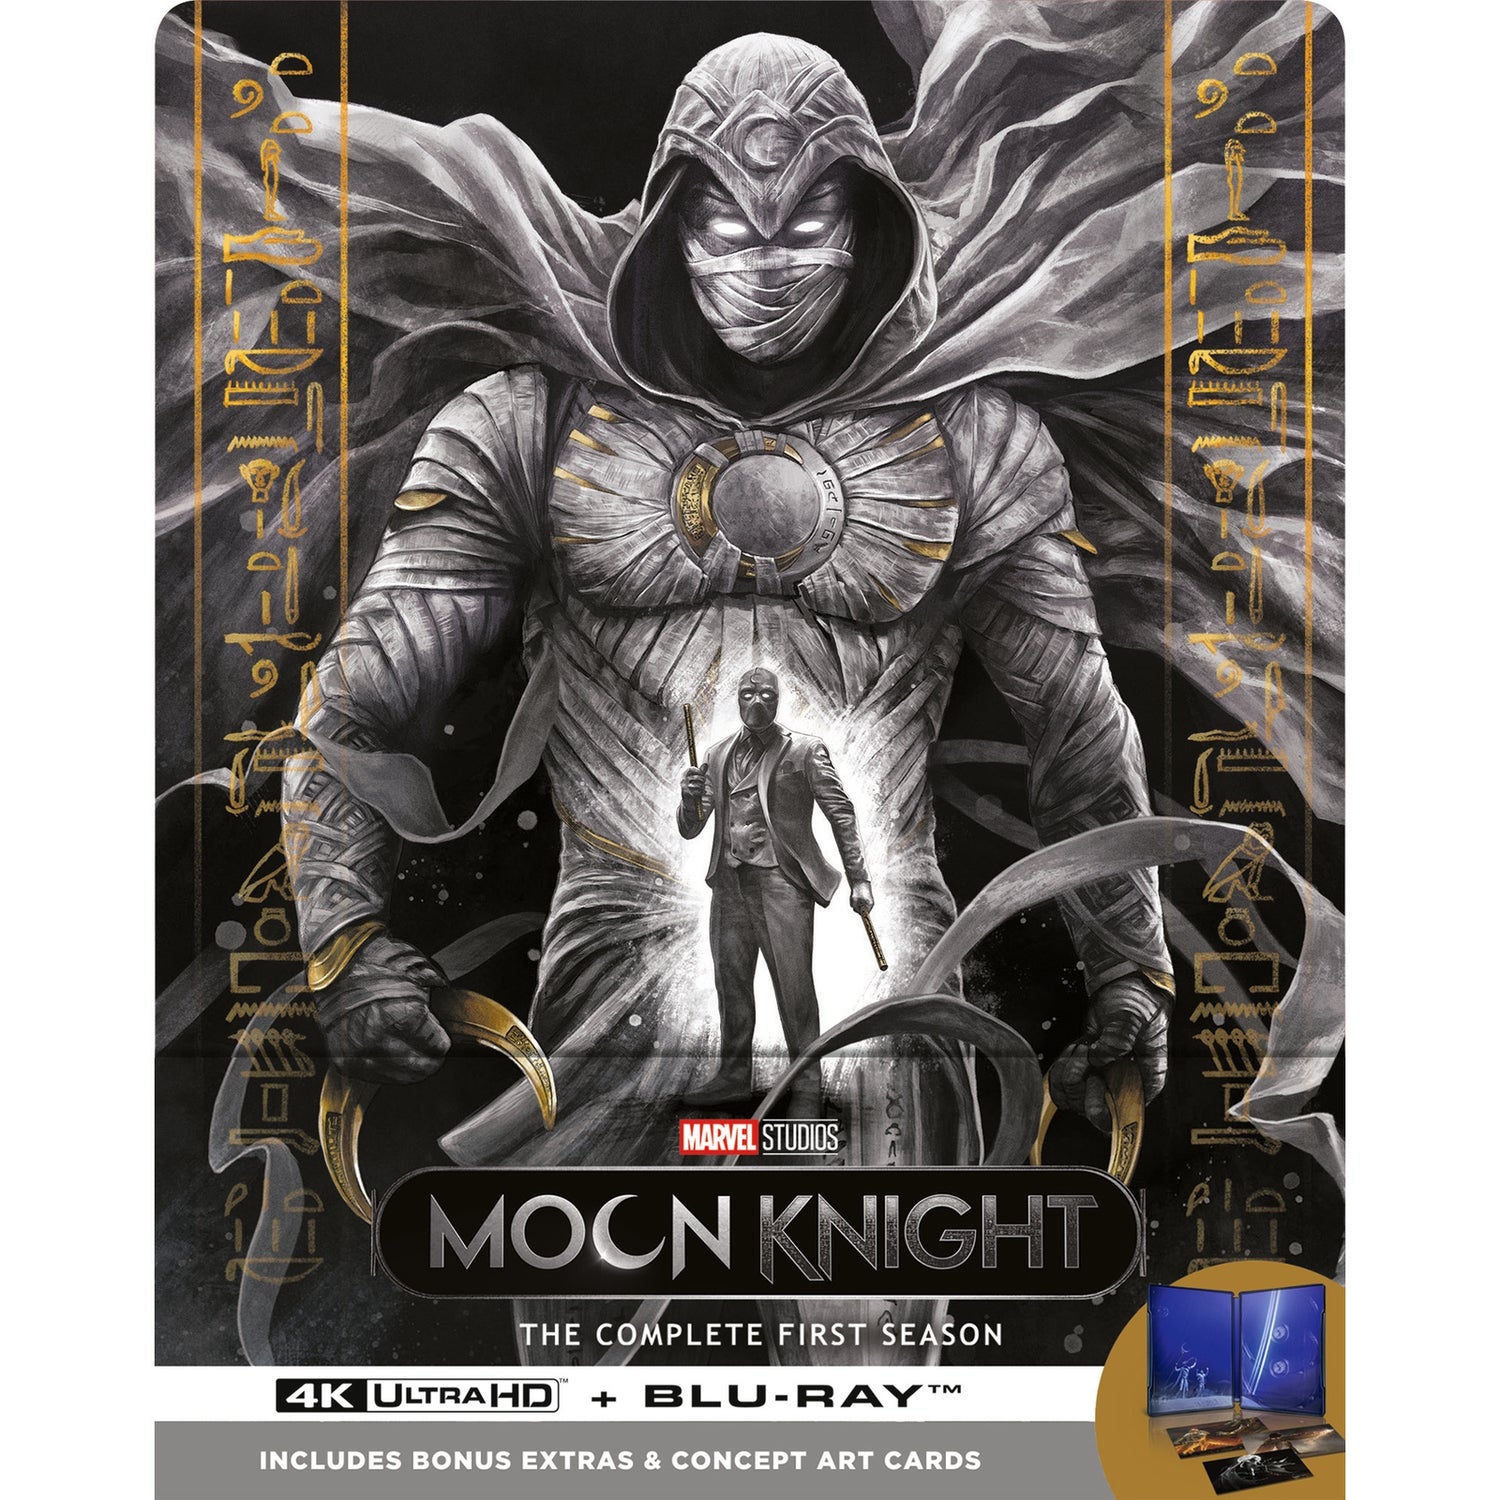 Marvel's Moon Knight SteelBook 4K Ultra HD & Blu-ray (Disney+ Original includes ArtCards)